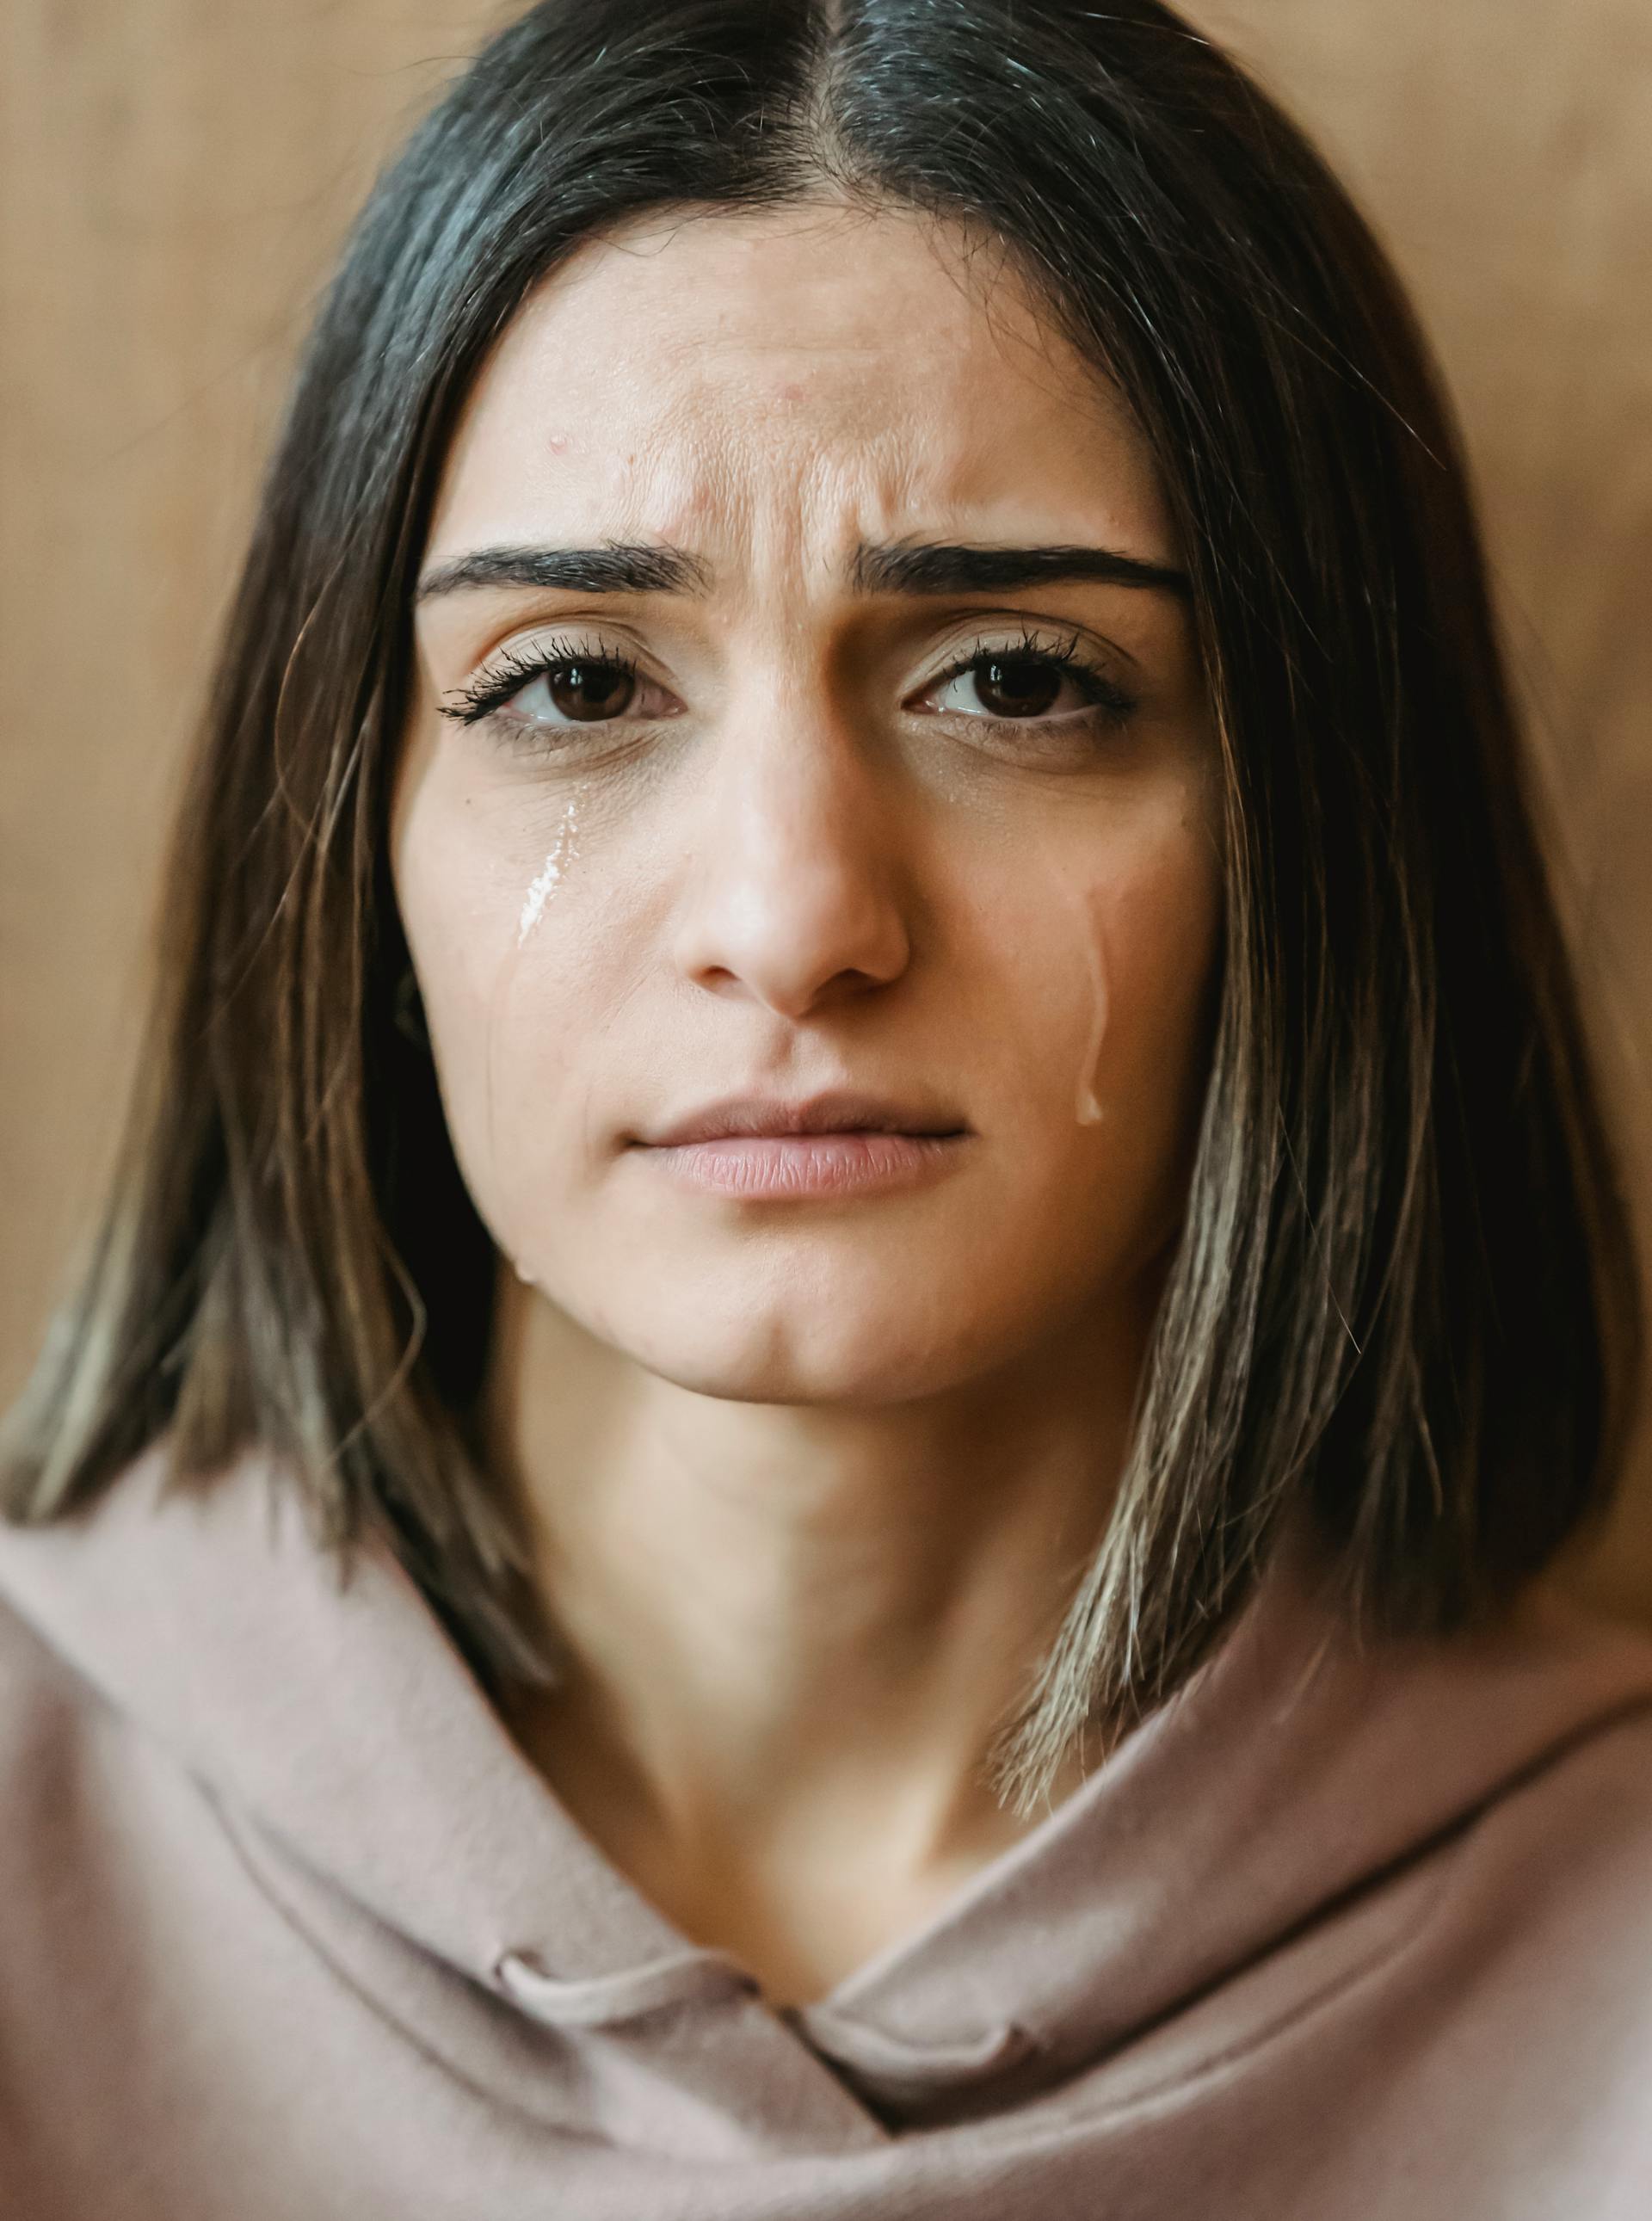 A sad teary-eyed woman | Source: Pexels